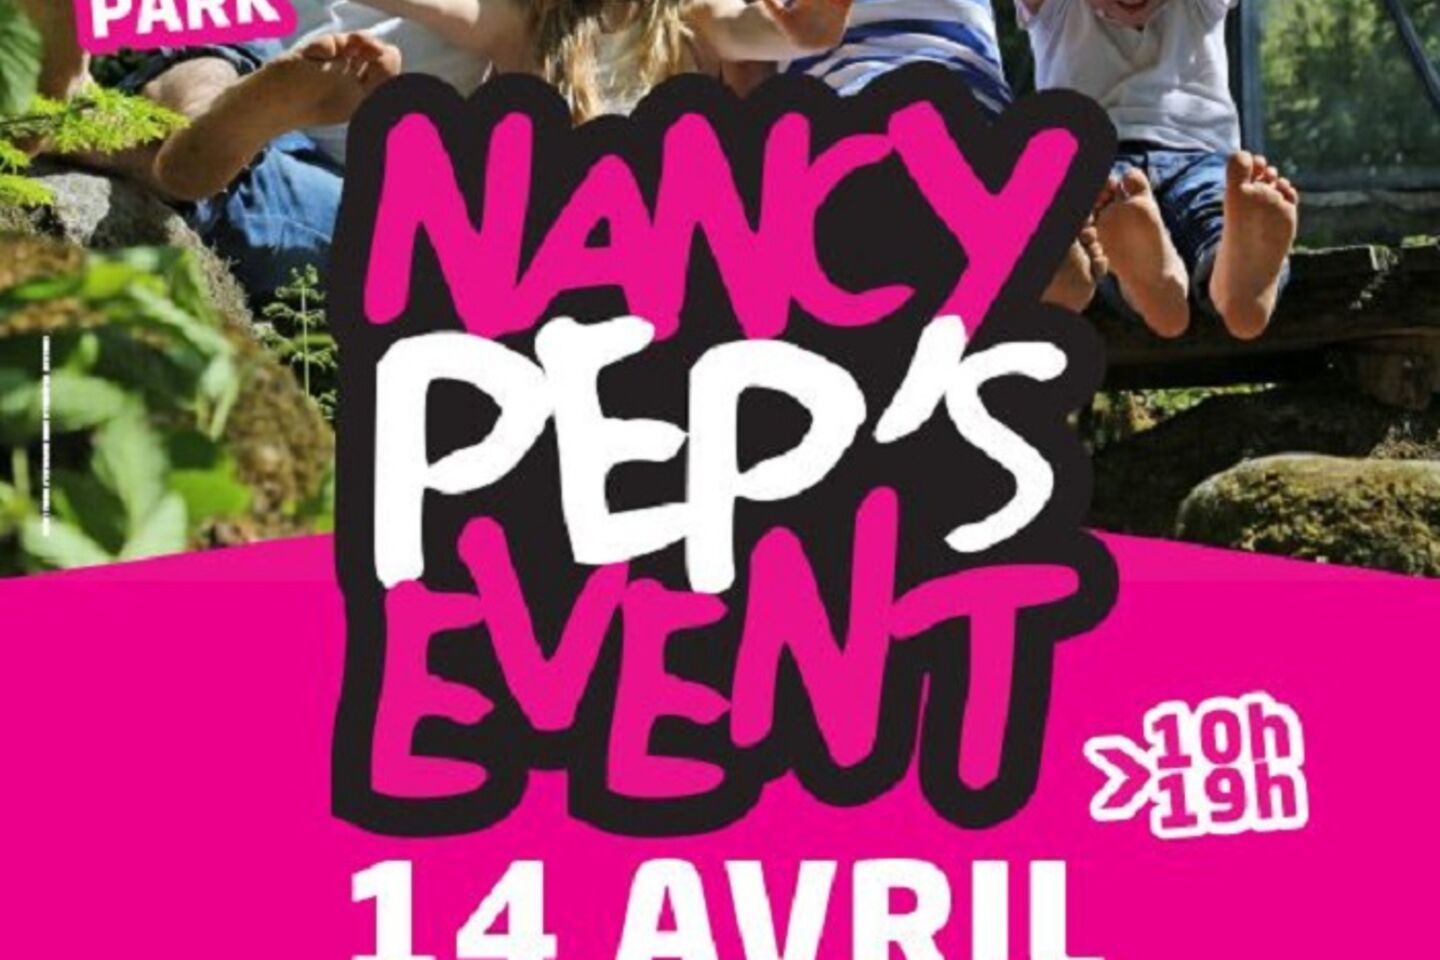 Nancy pep's event